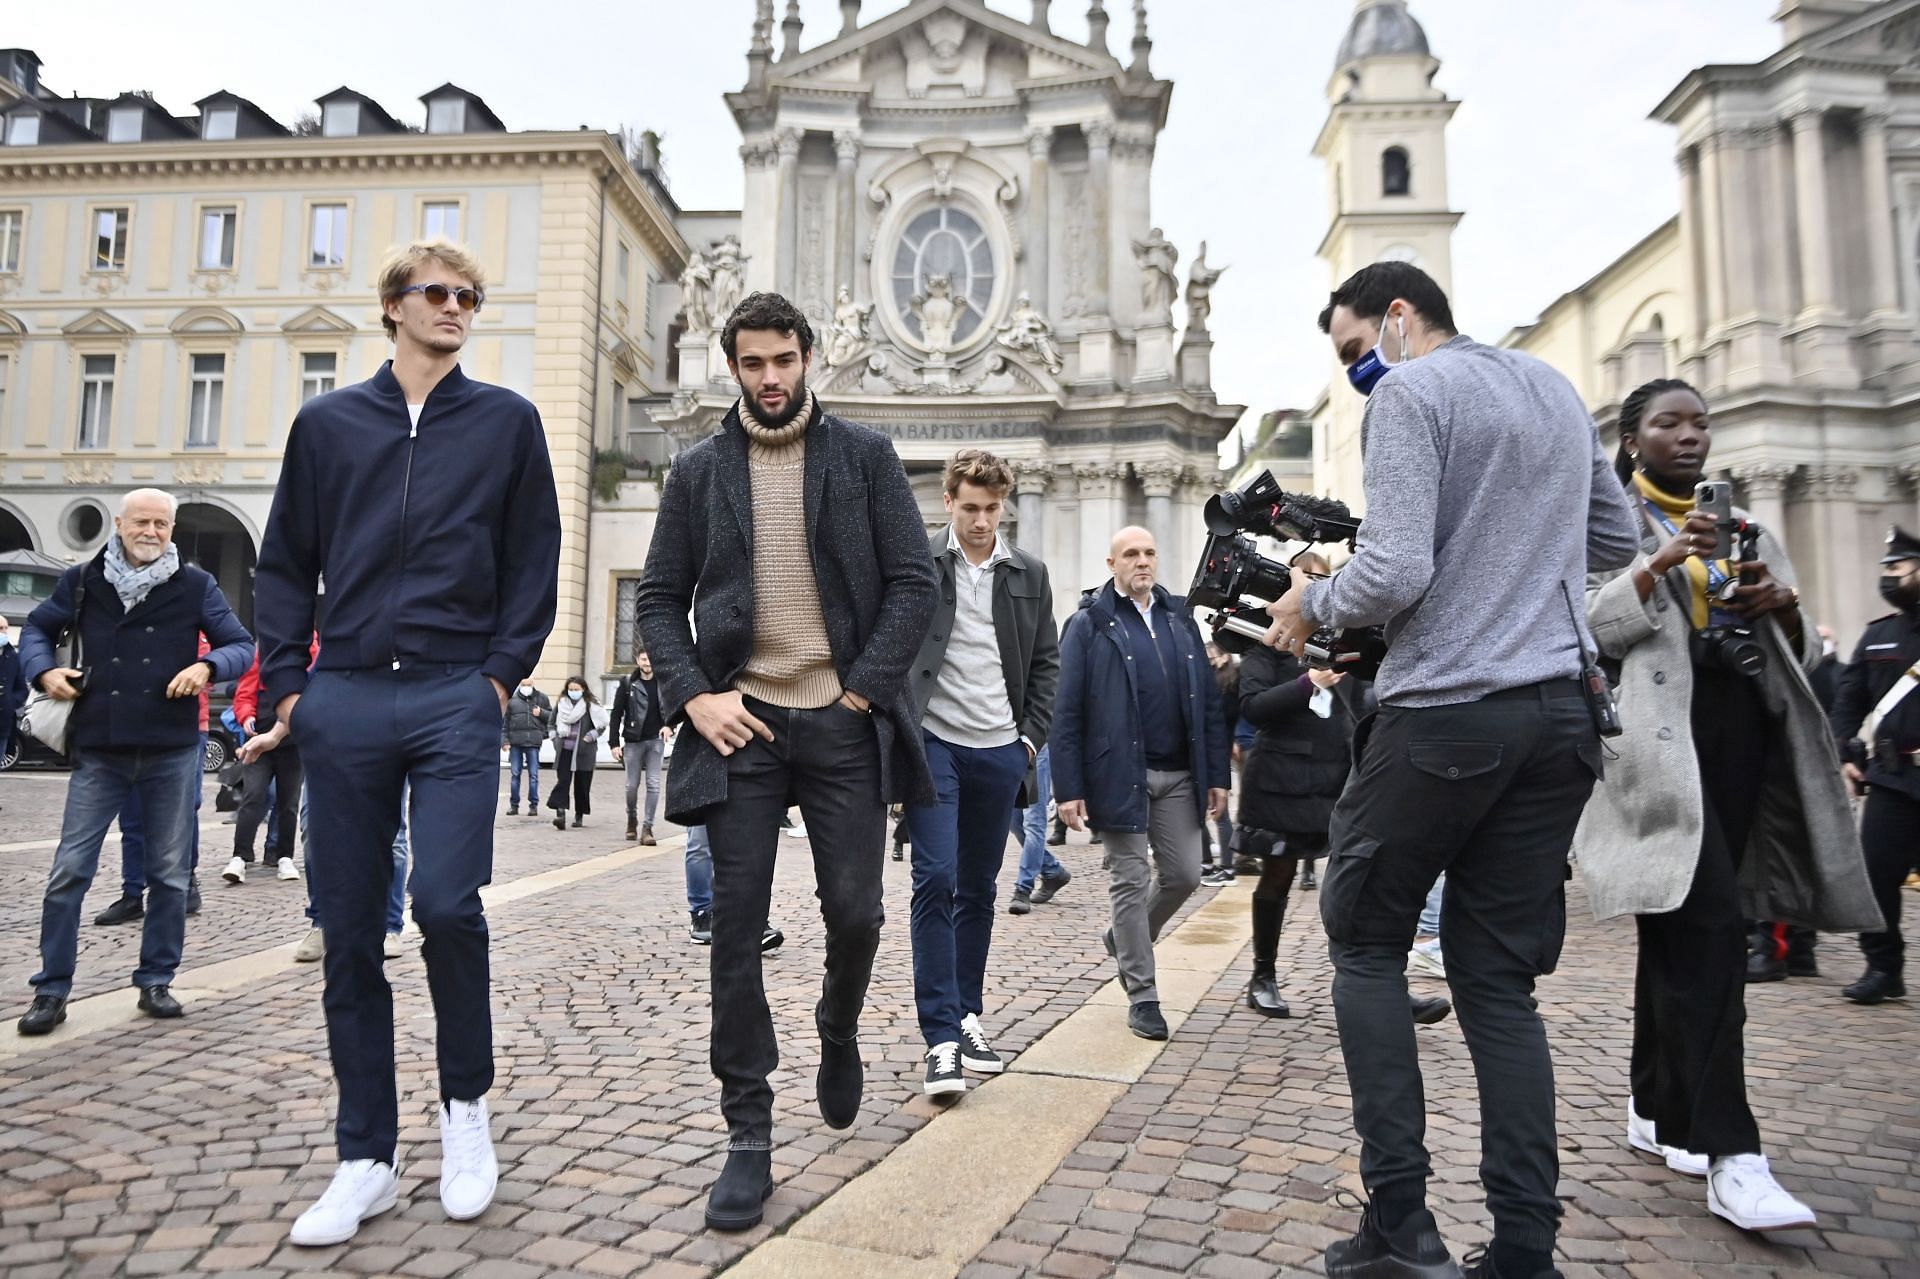 Alexander Zverev and Matteo Berrettini walking together in Turin